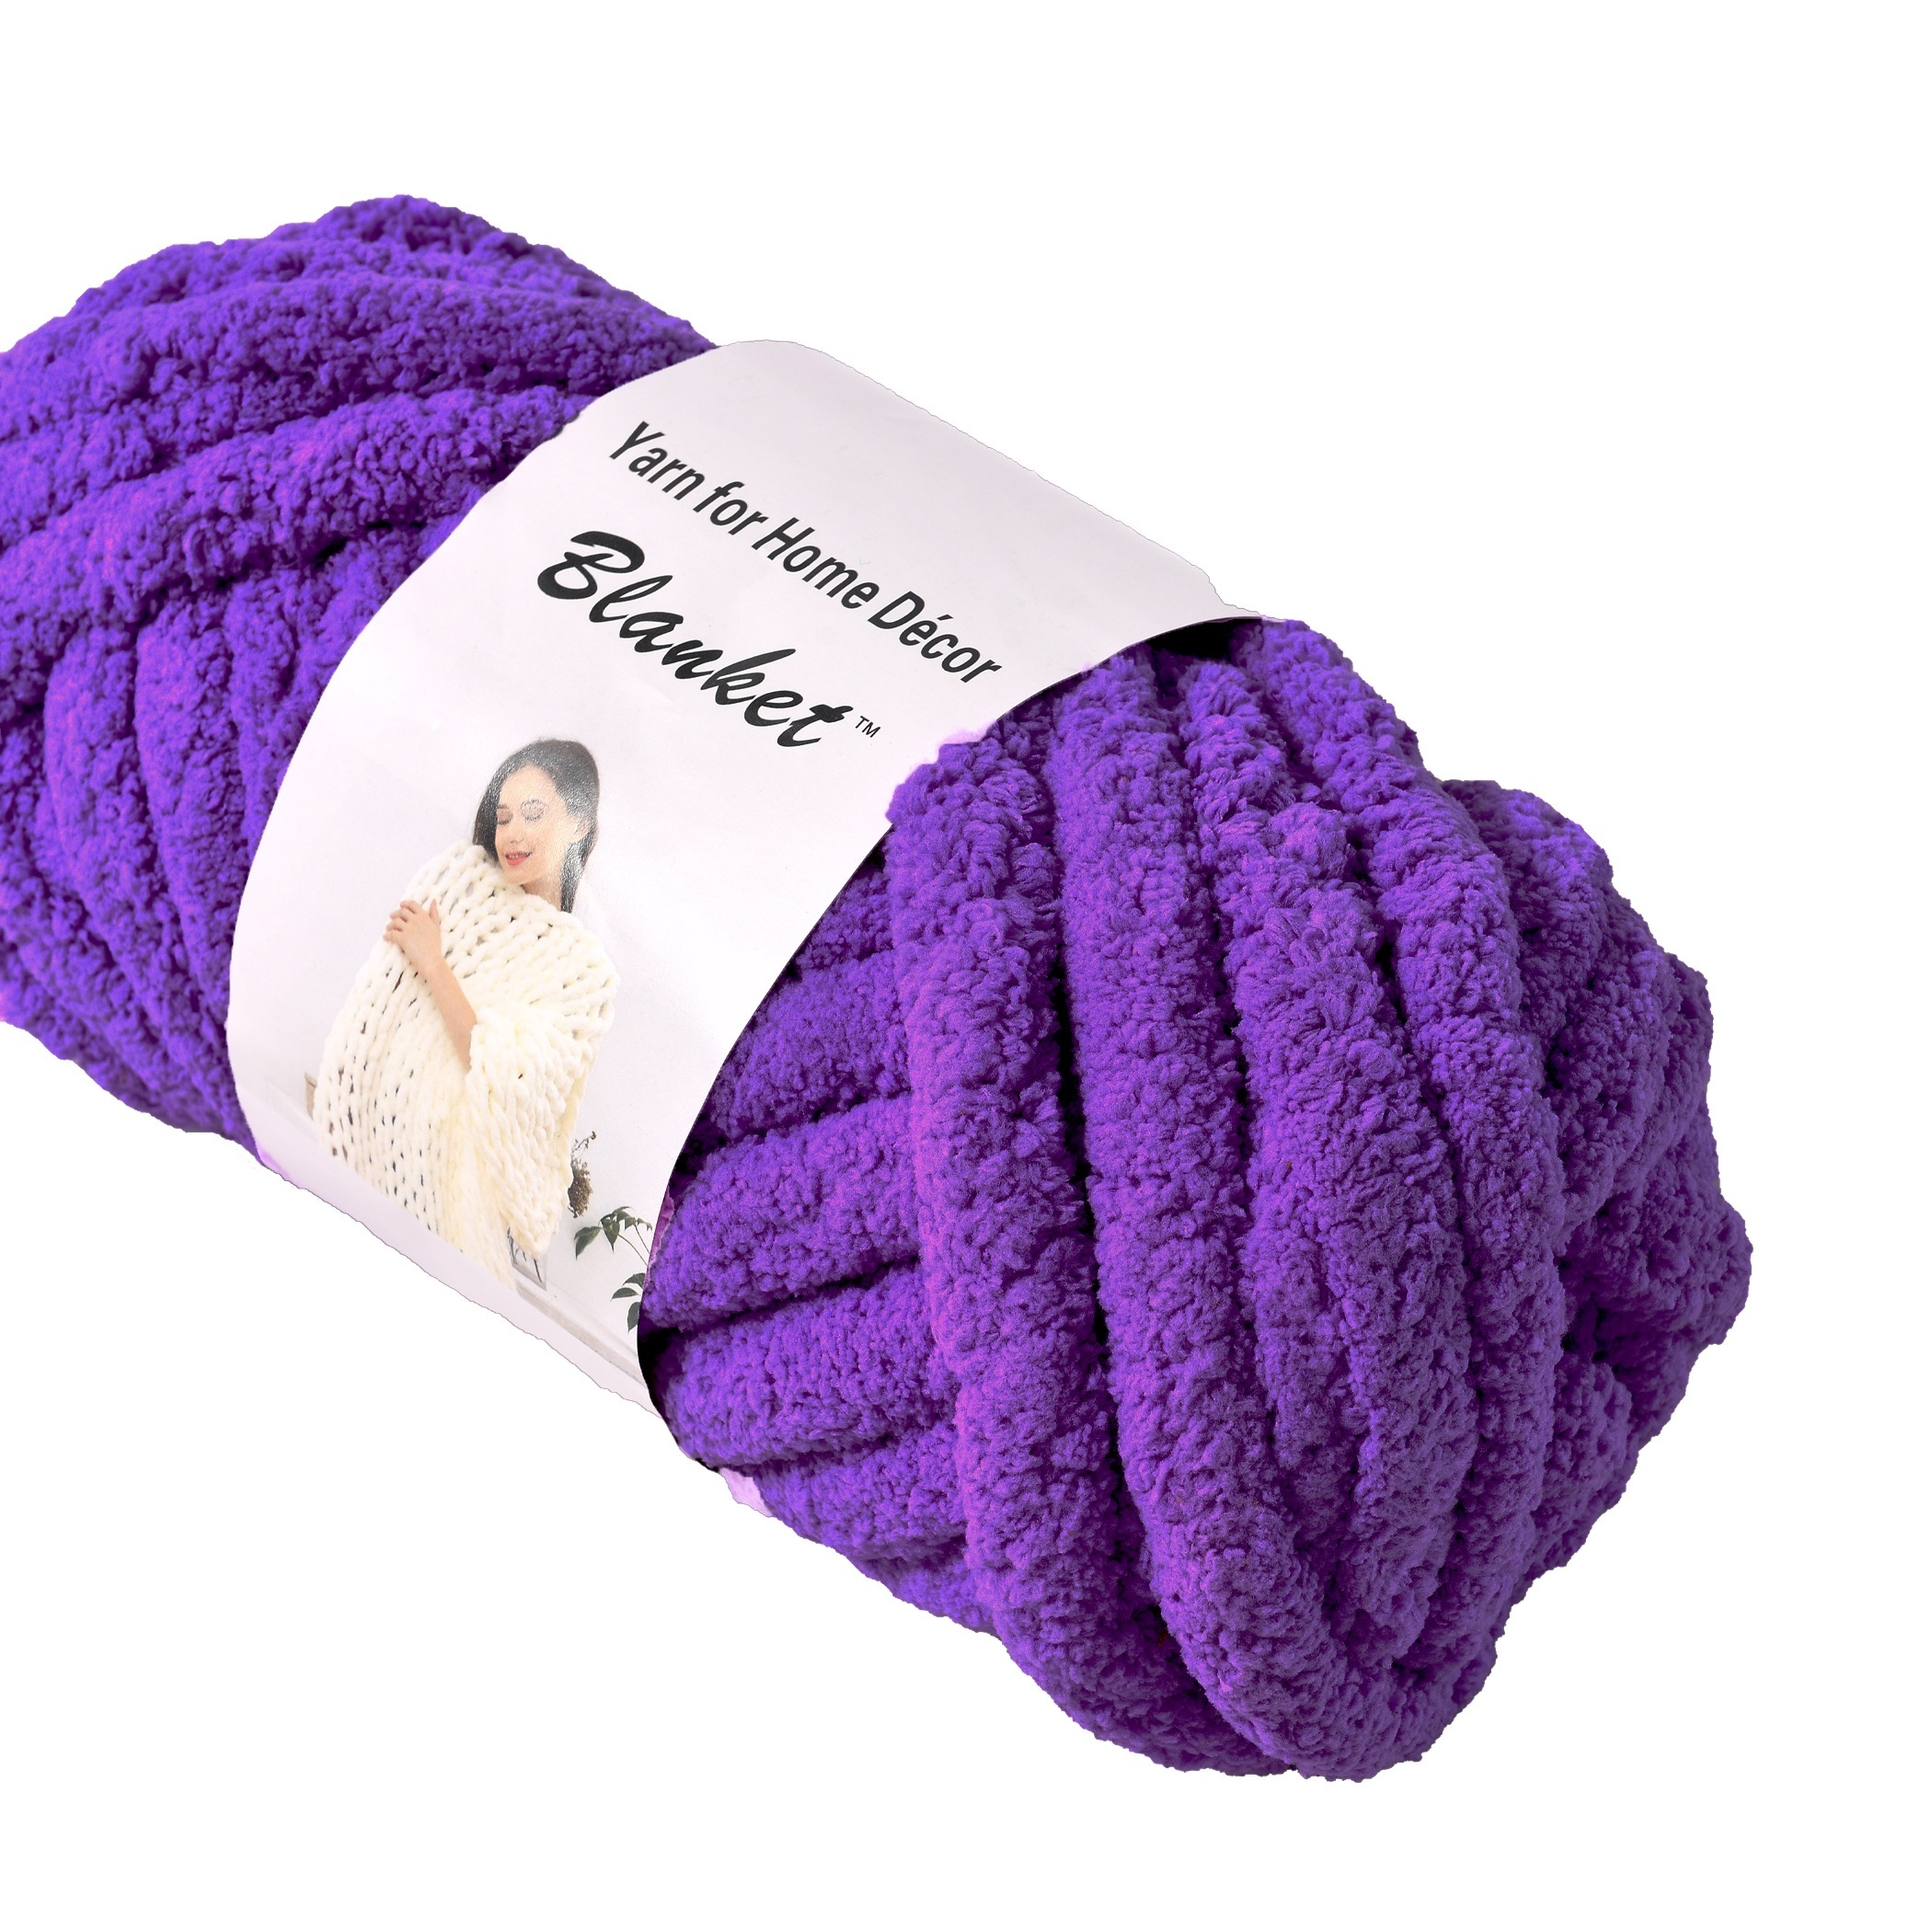 Chenille Chunky Knit Yarn,Cream White Chenille Yarn,Extreme Knitting  Yarn,Arm Knitting Yarn,Thick Yarn,Bulky Knit,Chunky Knit Blanket  Yarn,250g/8 oz